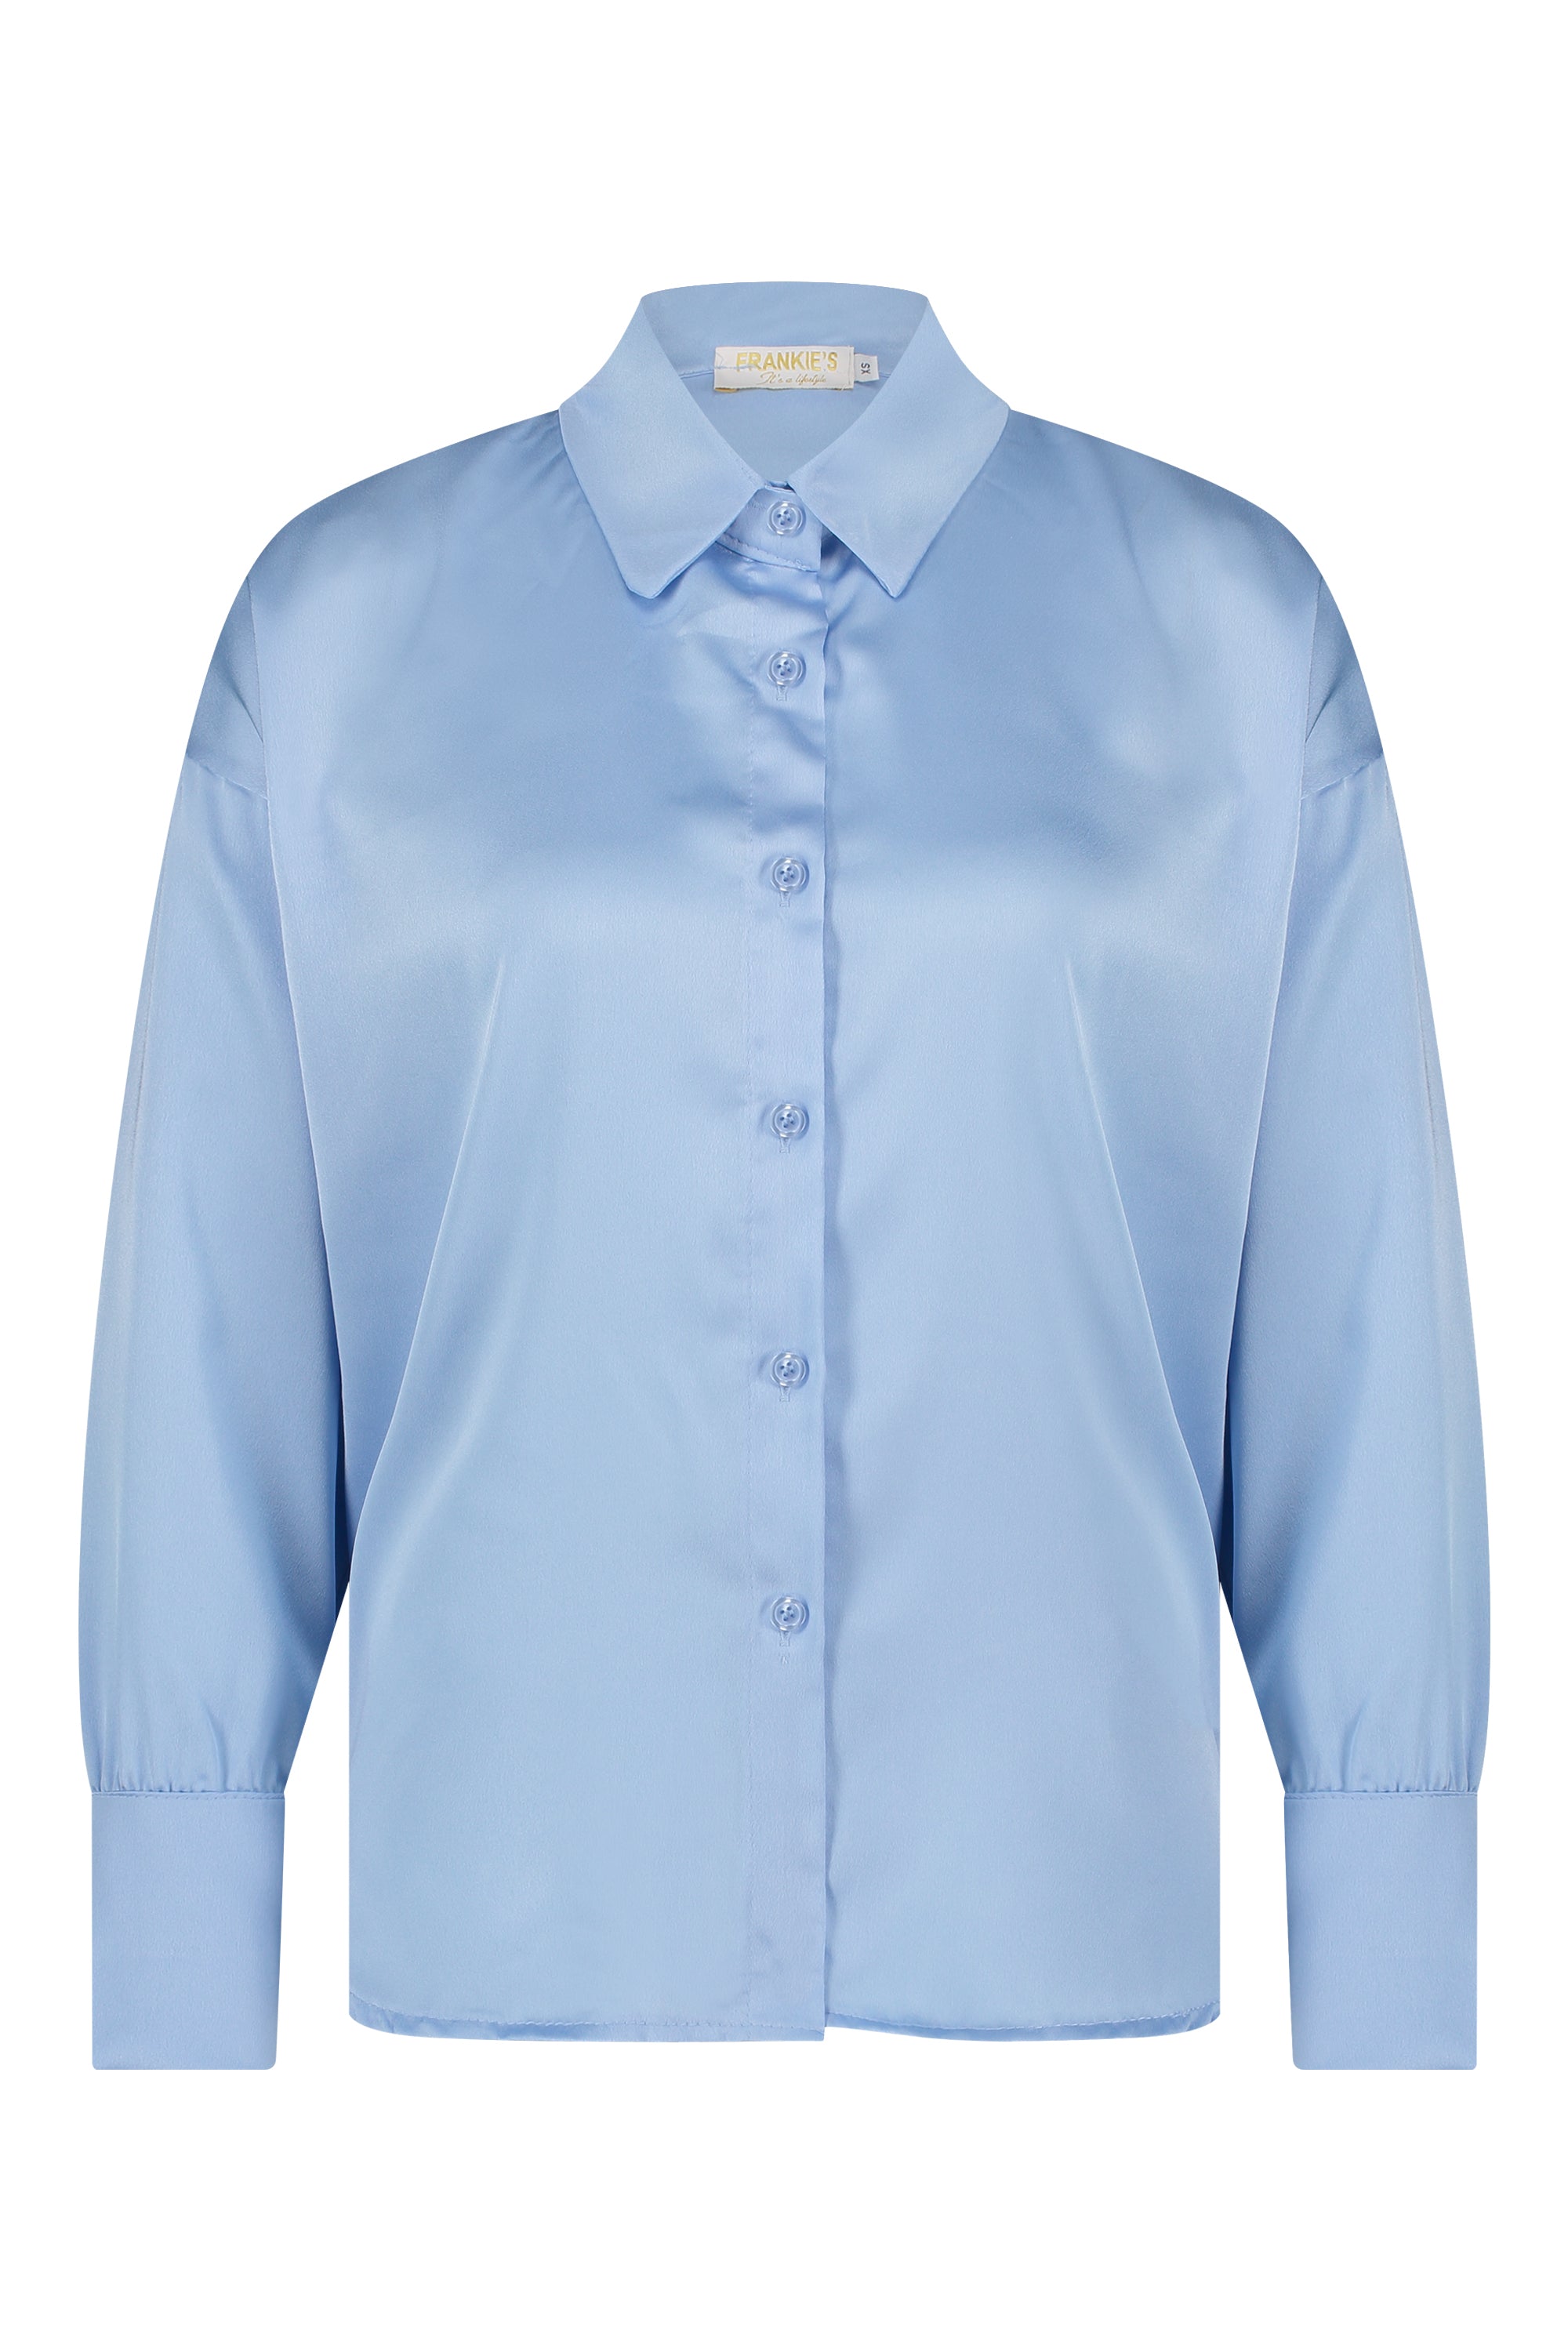 Satin blouse light blue